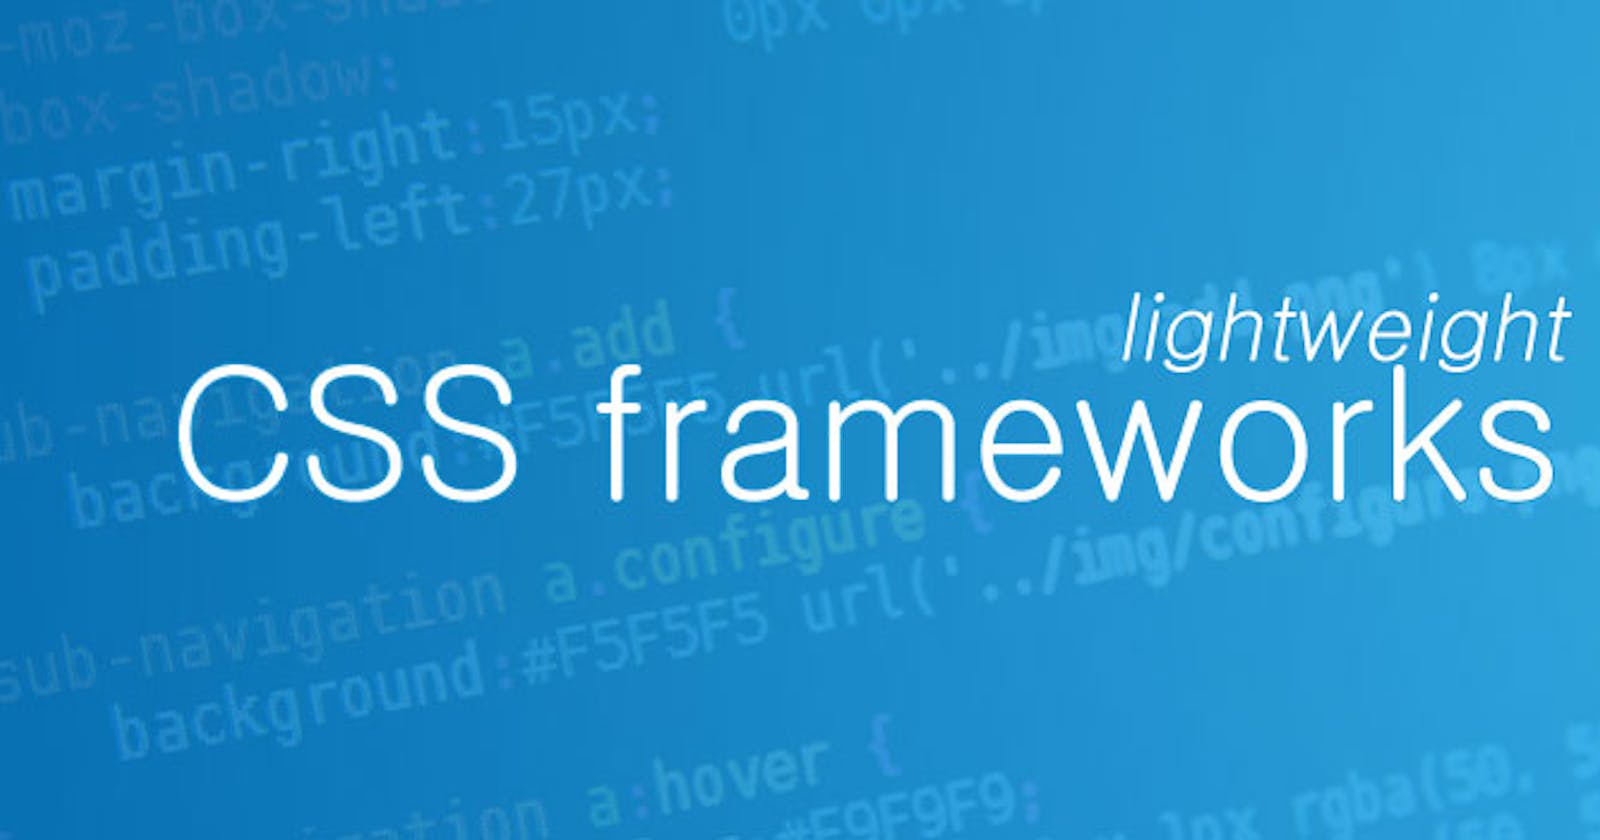 Top 10 lightweight CSS frameworks for building fast websites in 2017